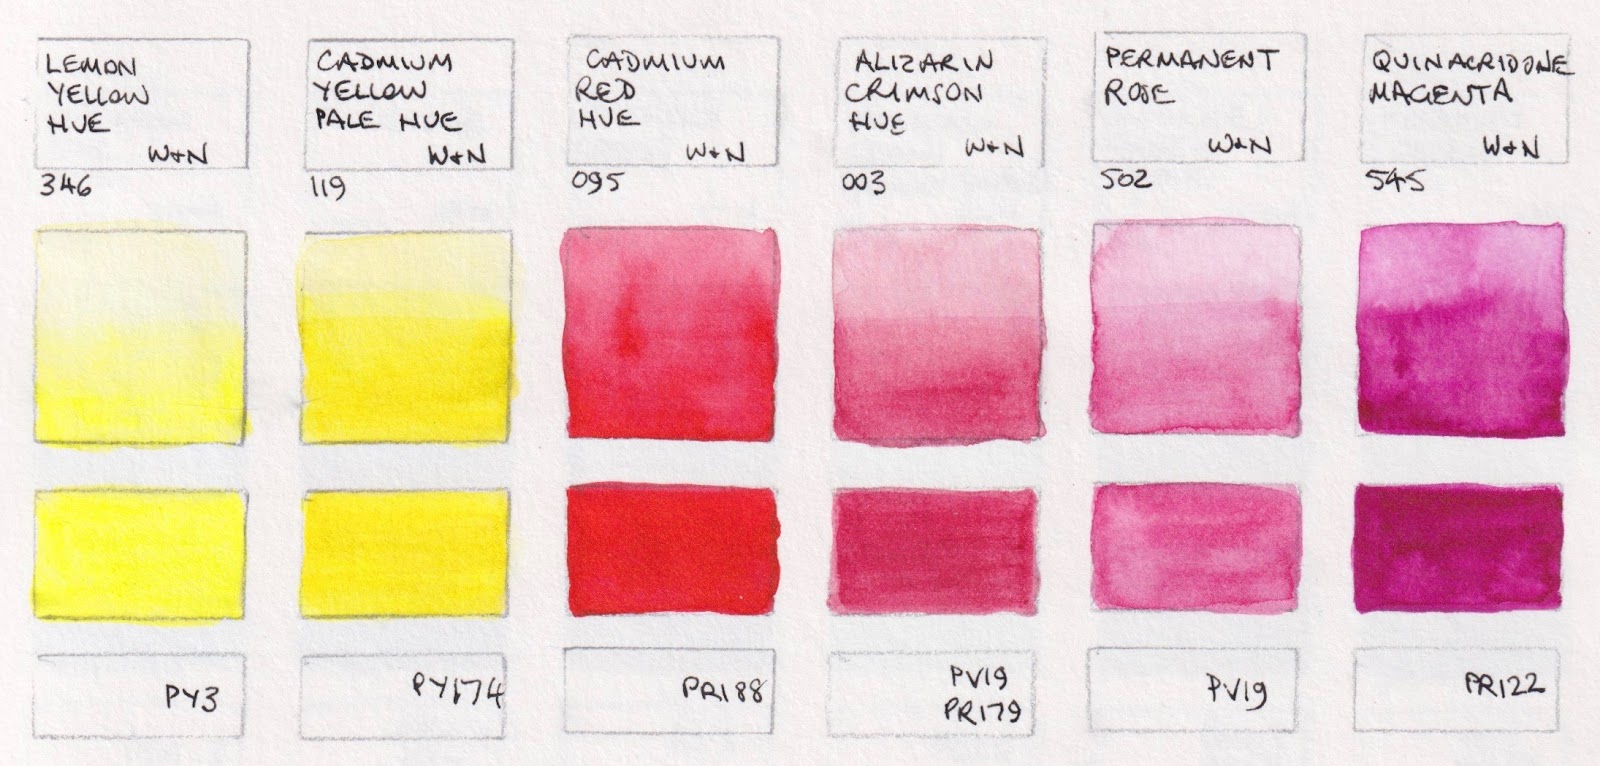 Winsor & Newton - Watercolor Marker - Cadmium Yellow Hue